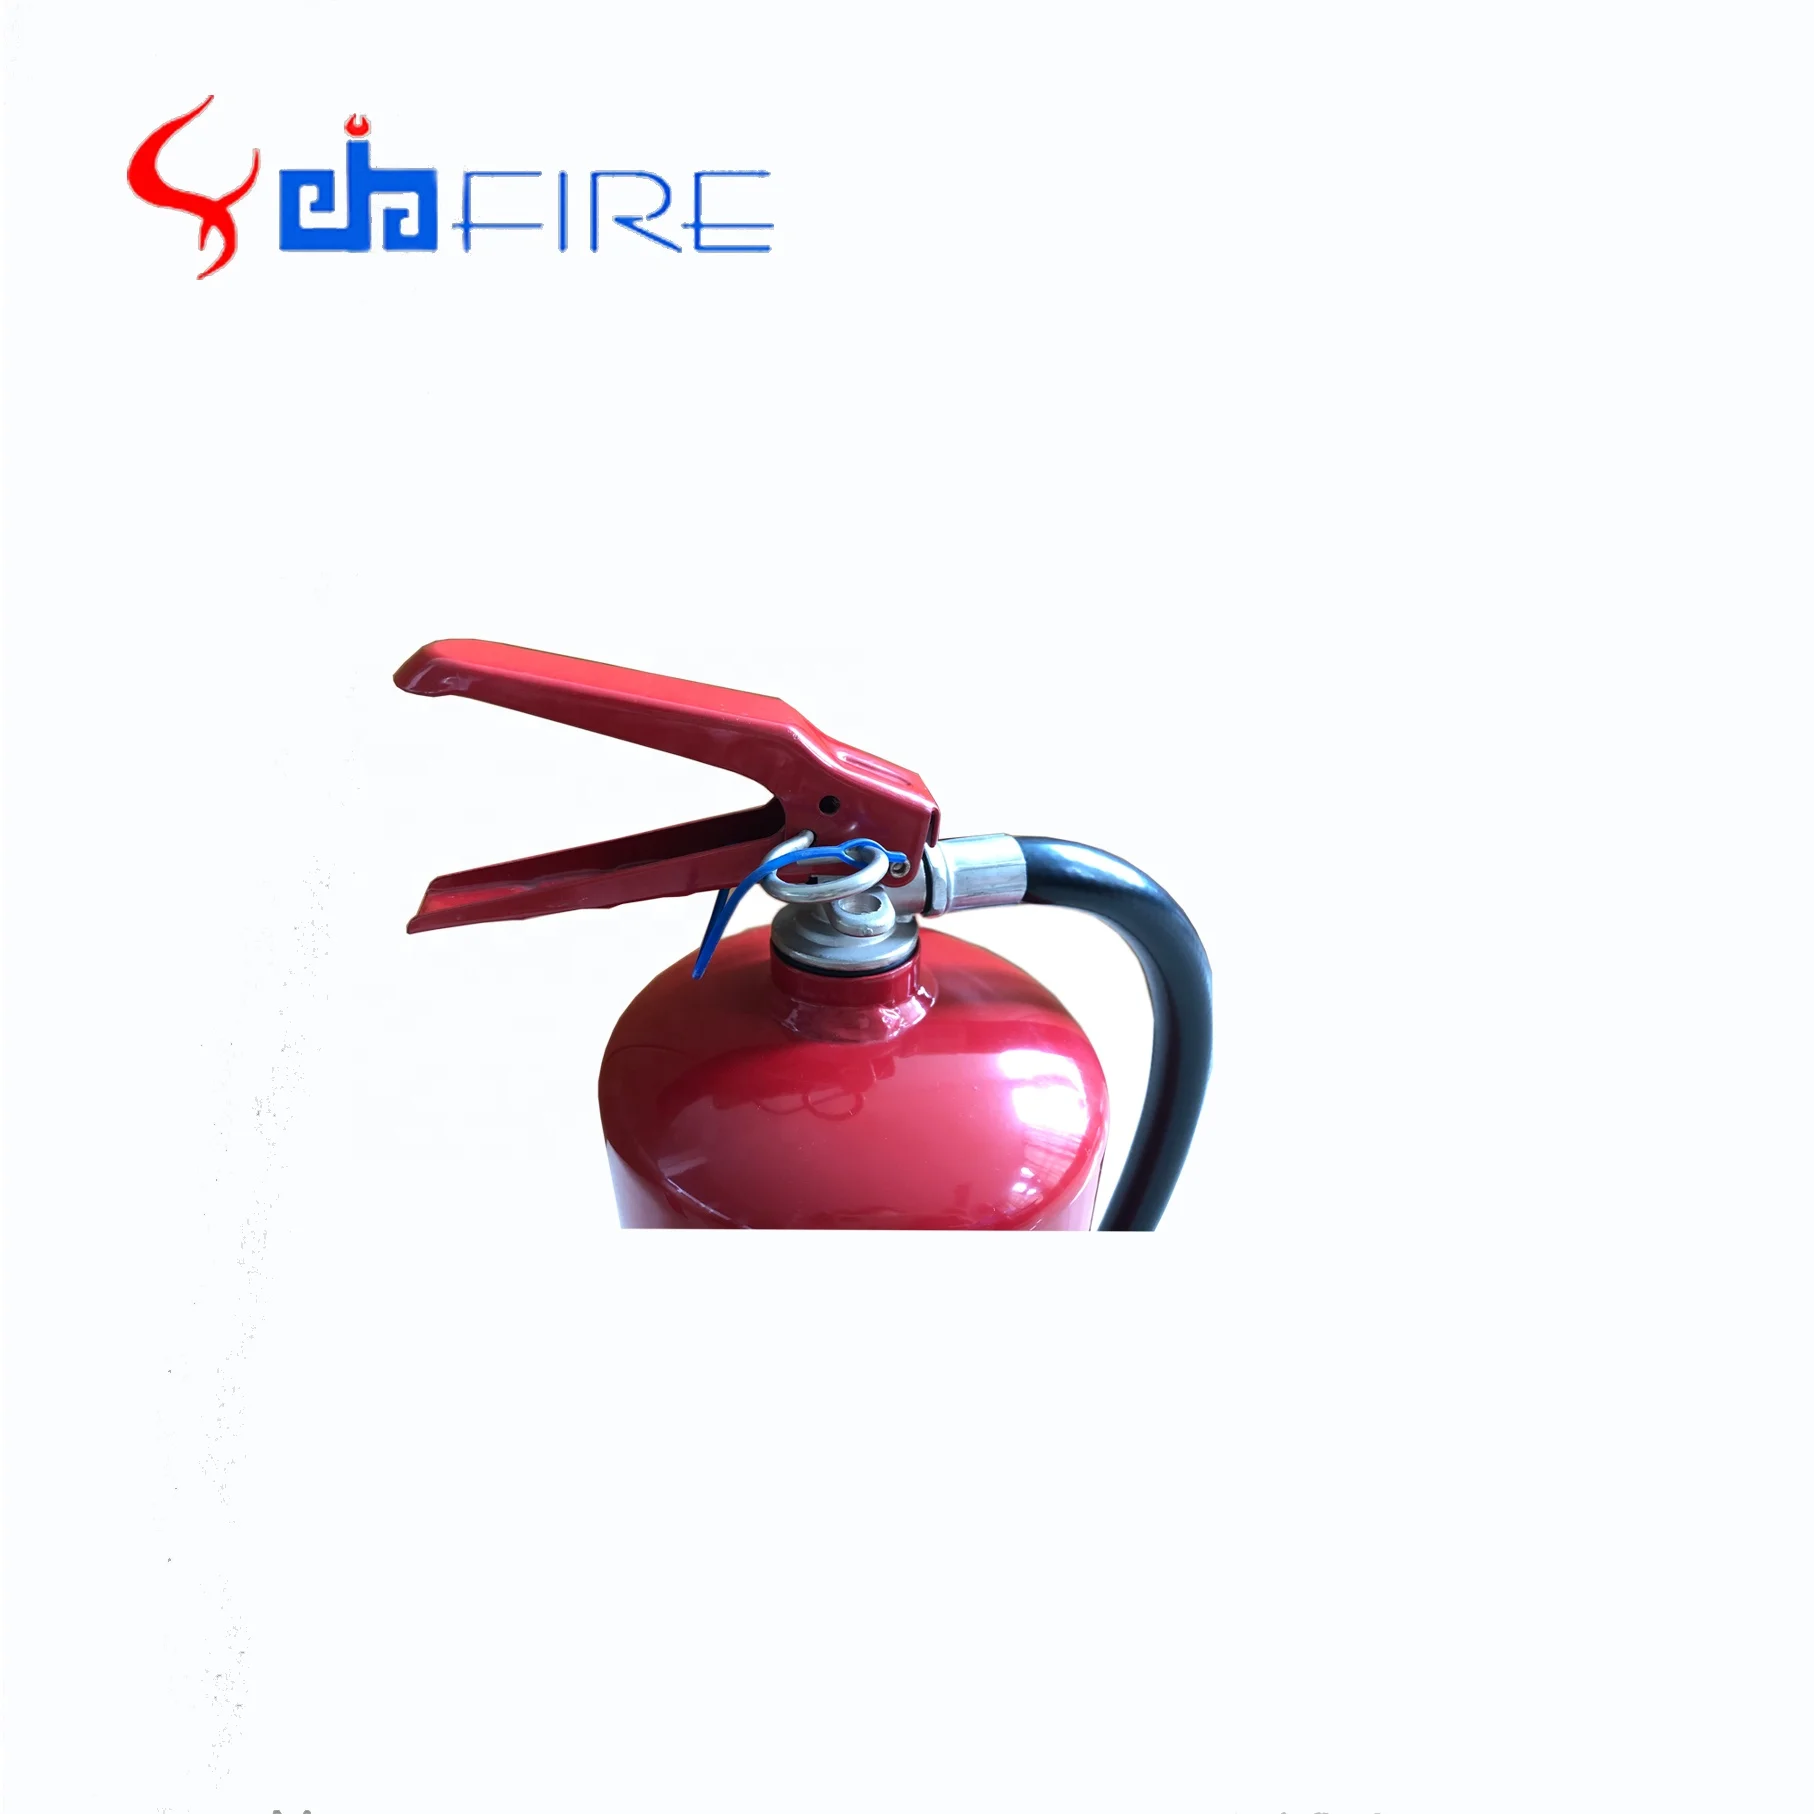 
3kg abc dry powder fire extinguisher china iso9001 empty safety portable fire extinguisher cylinder 